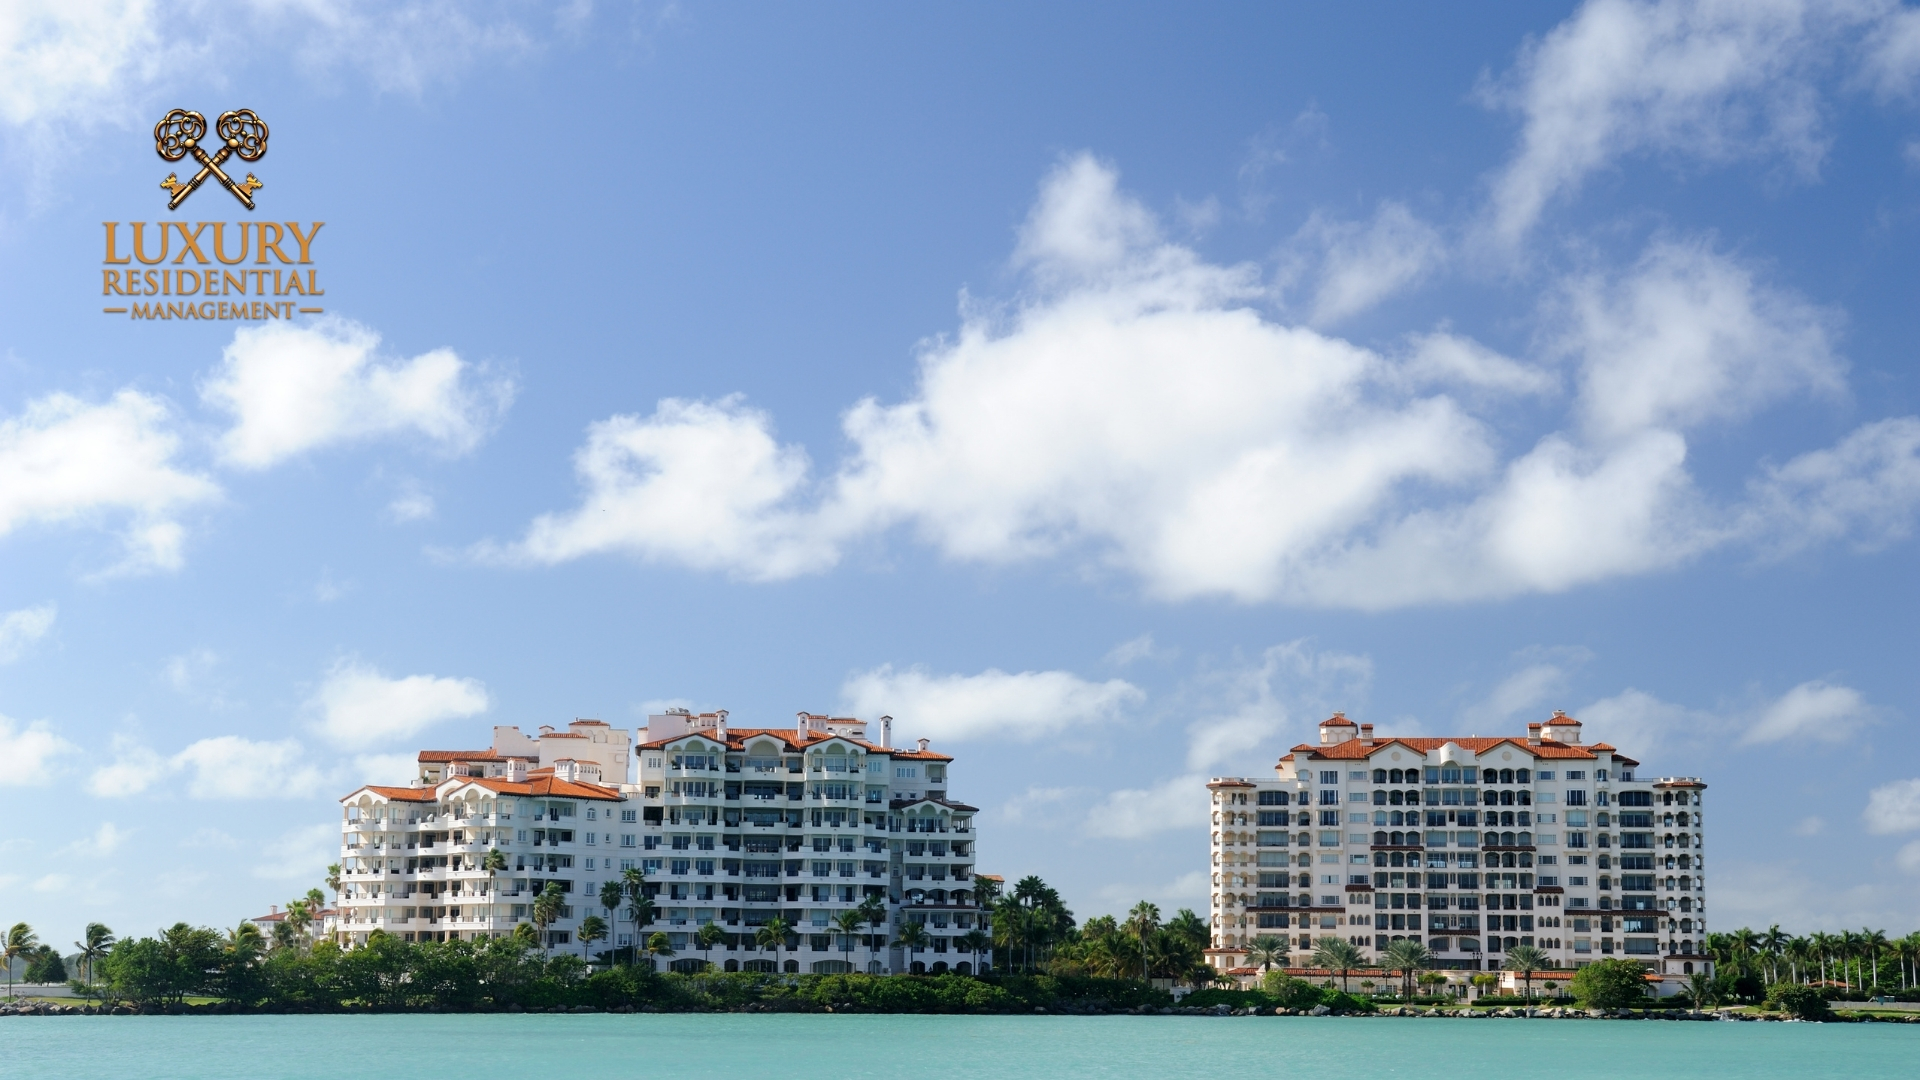 Miami, Miami beach, Luxury, Mansion, Property Management